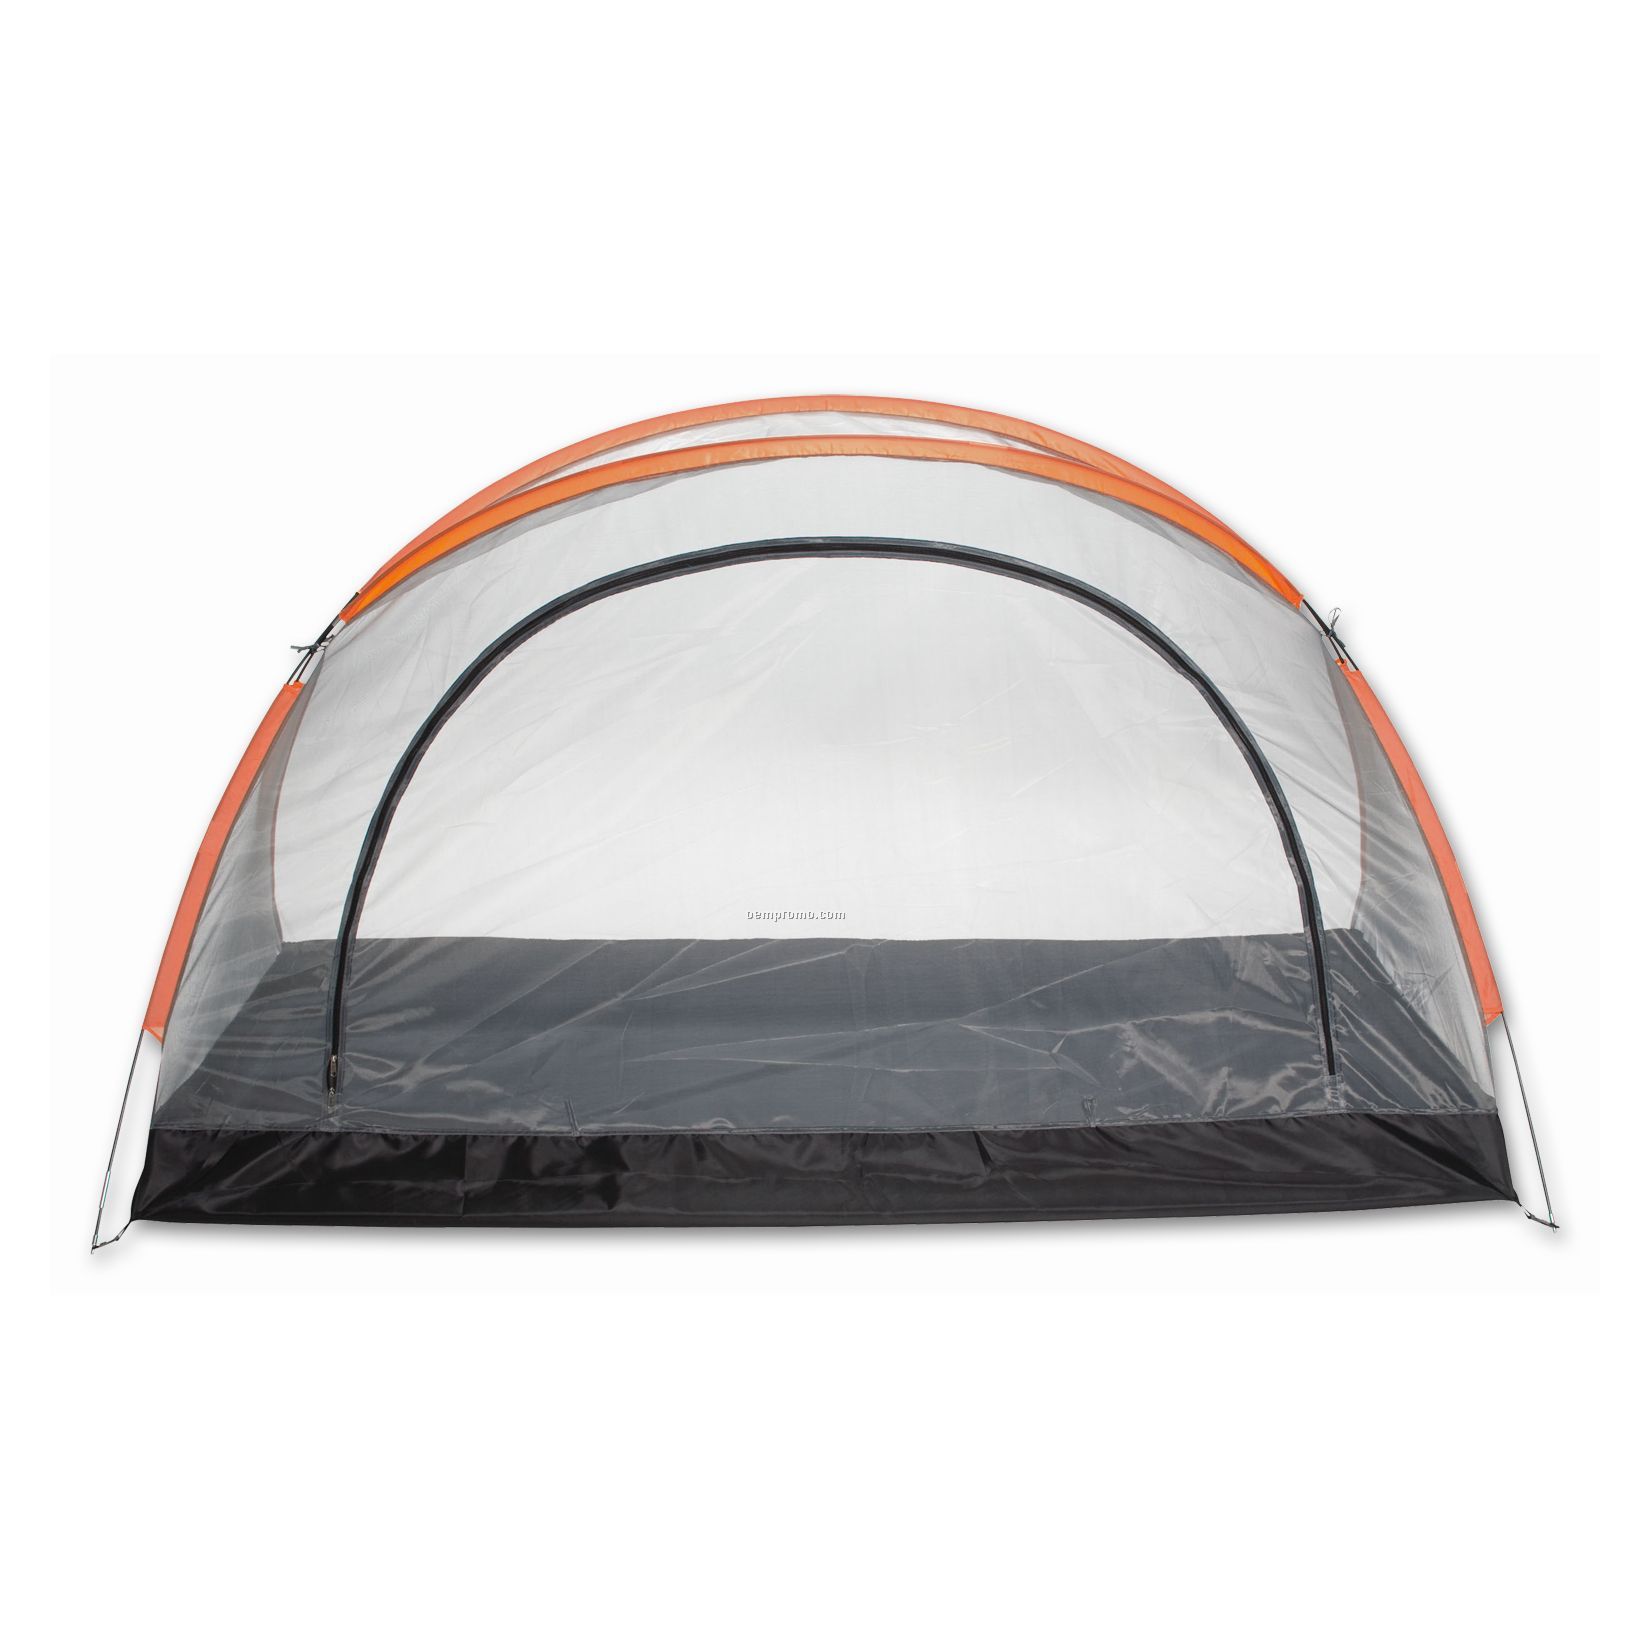 Stansport Bug-not Mesh Backpack Tent